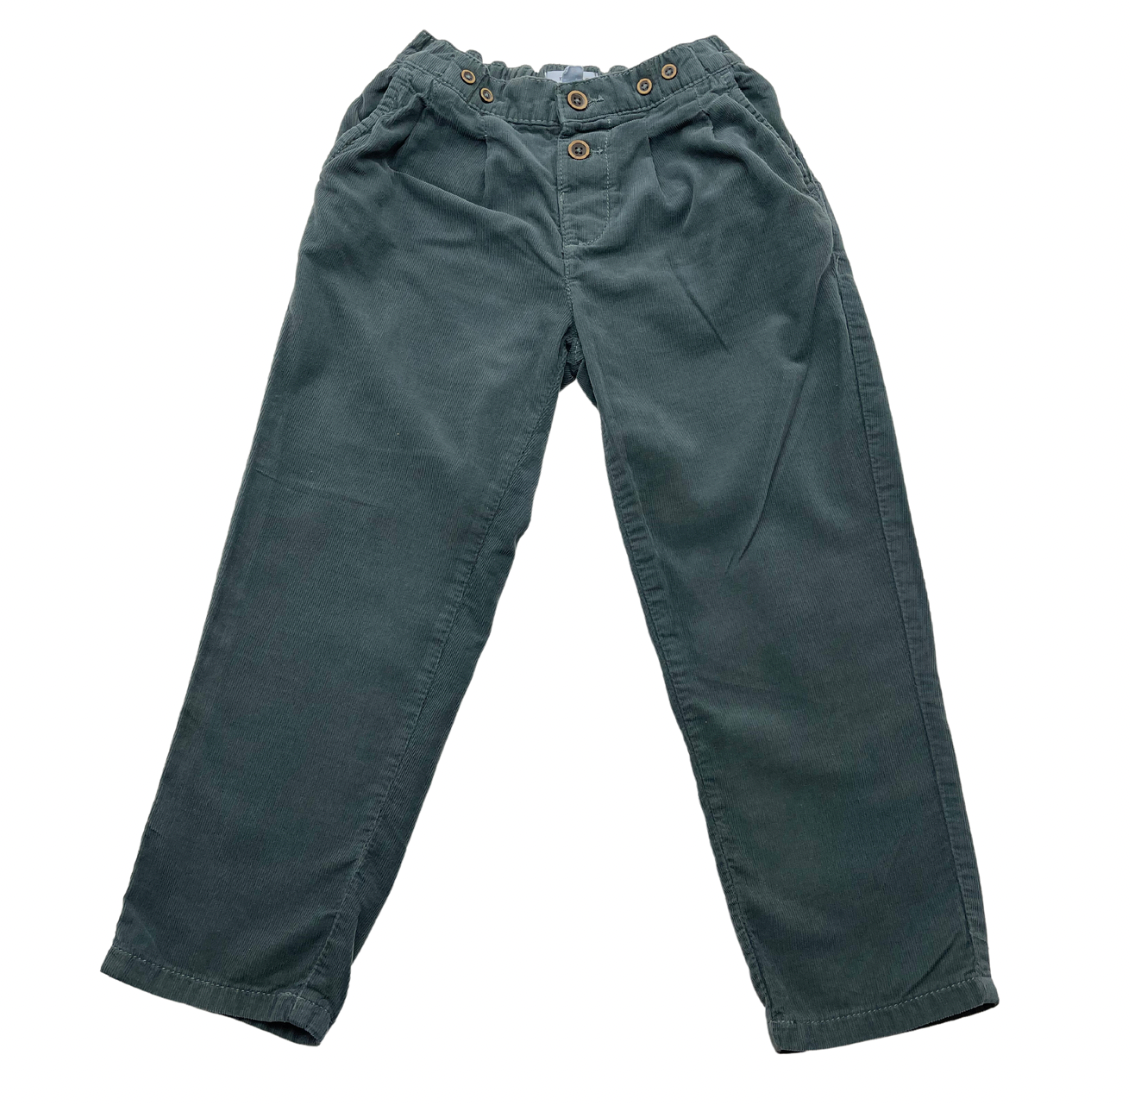 NEWBIE - Pantalon en velours bleu/vert - 3/4 ans